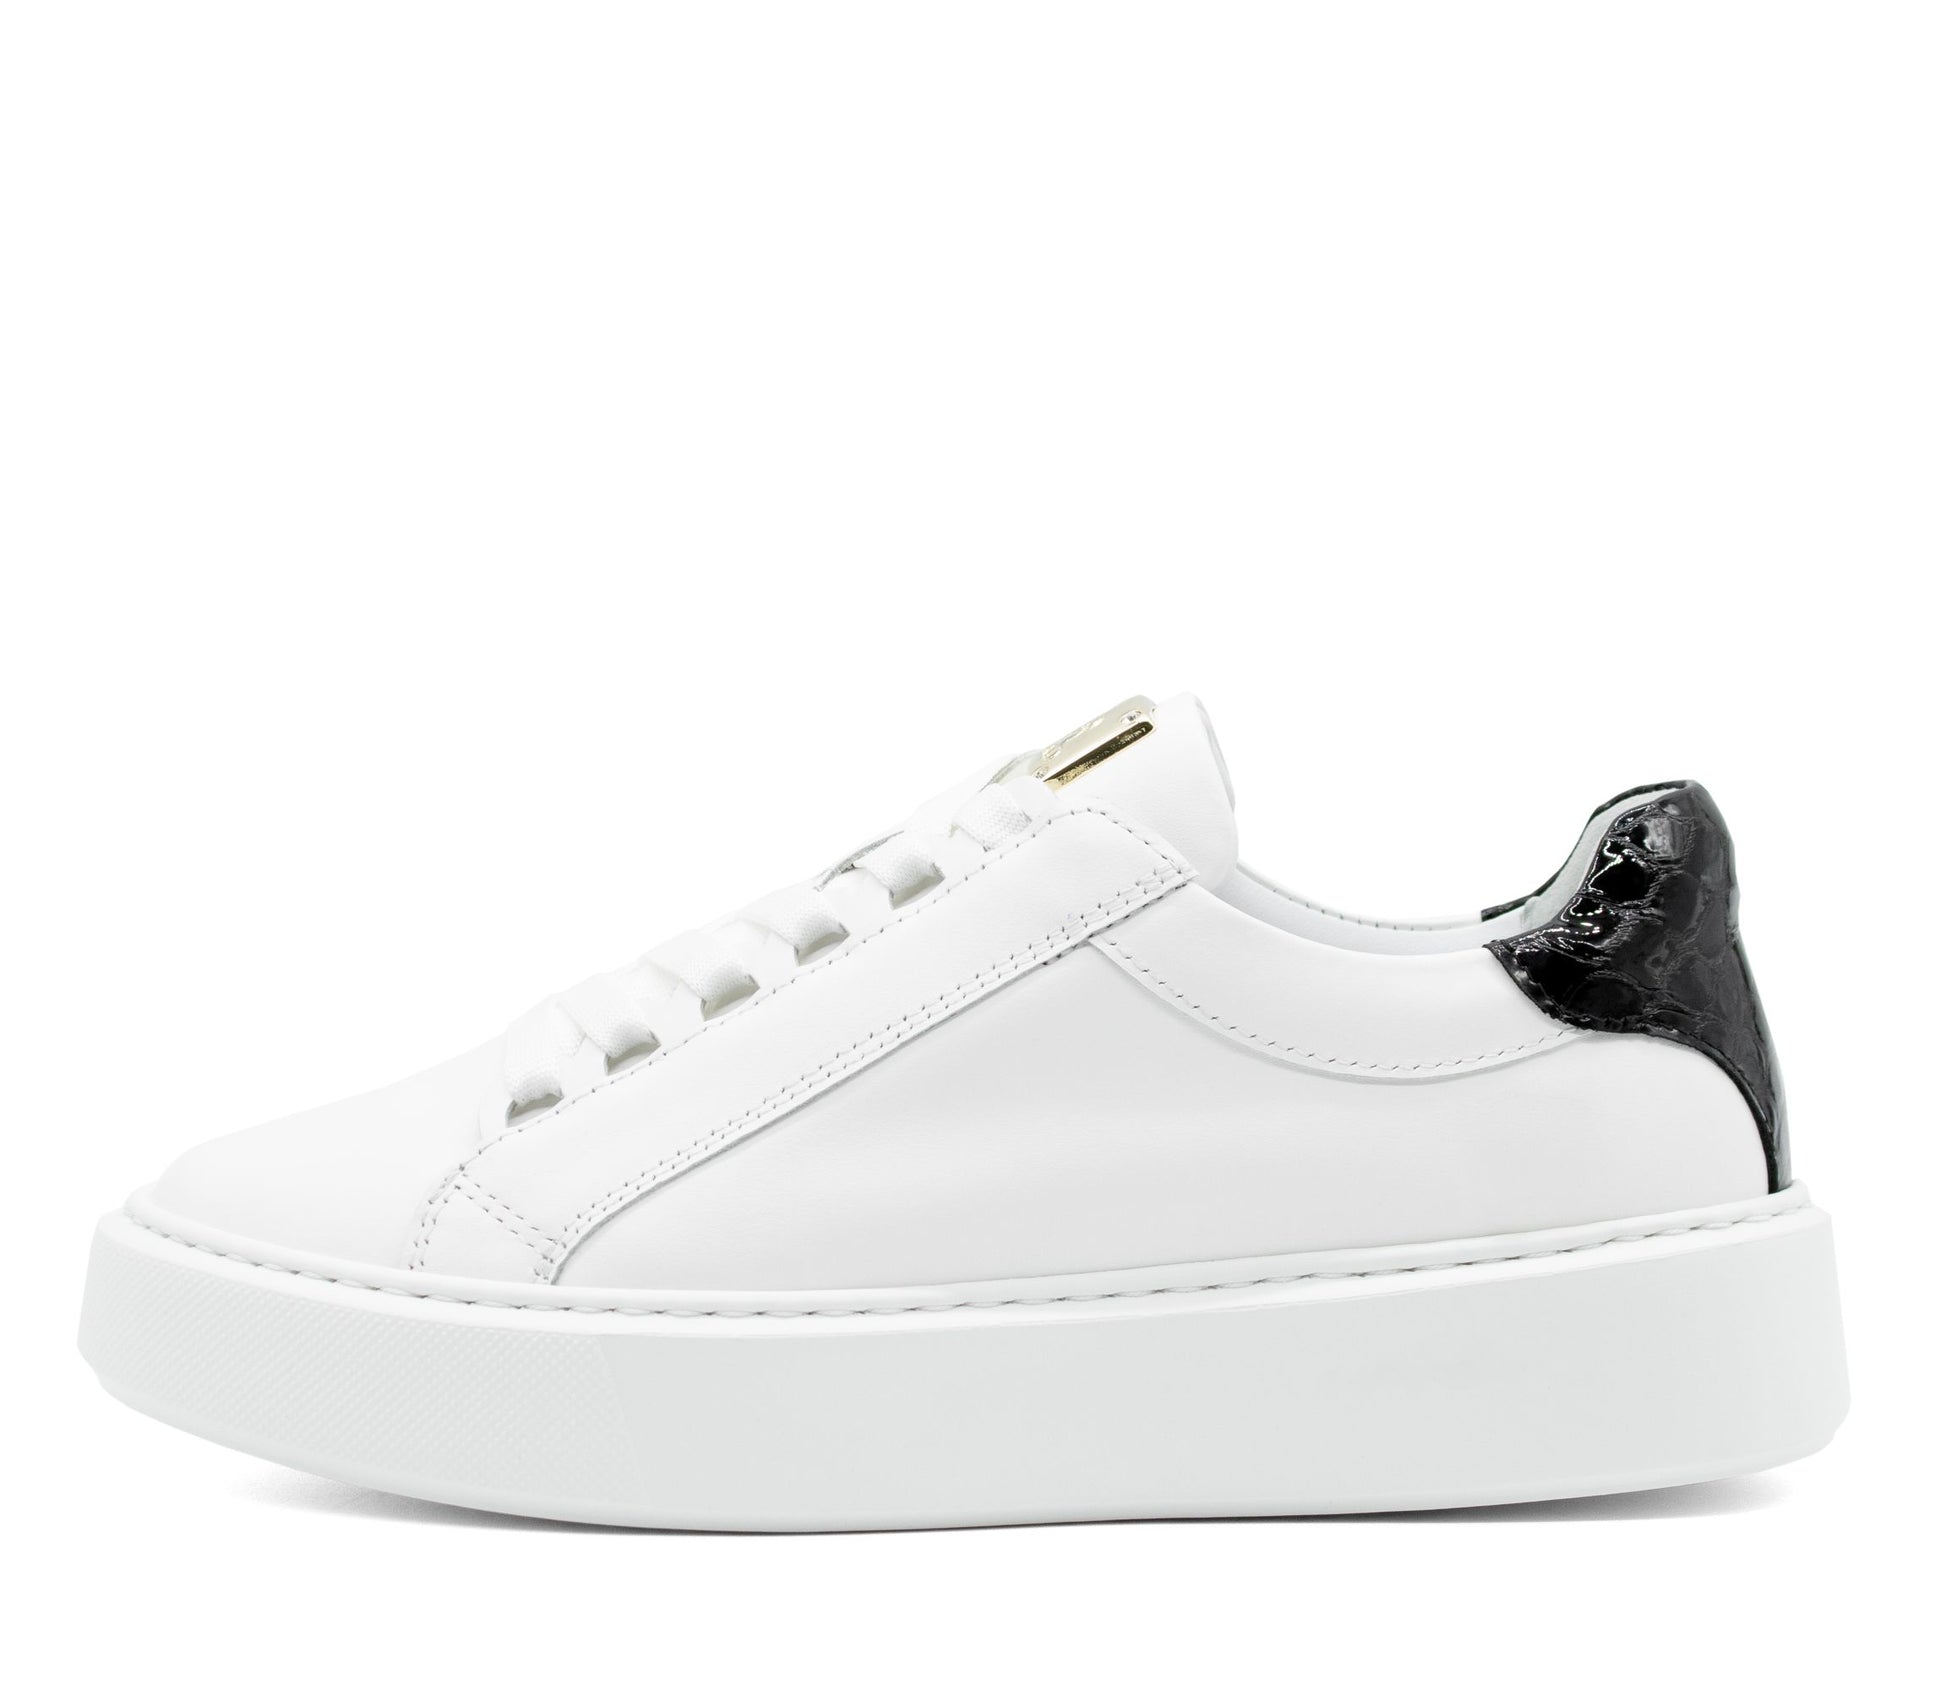 #color_ White & Black | Cavalinho Ragazza Sneakers - White & Black - 48010104.01_4